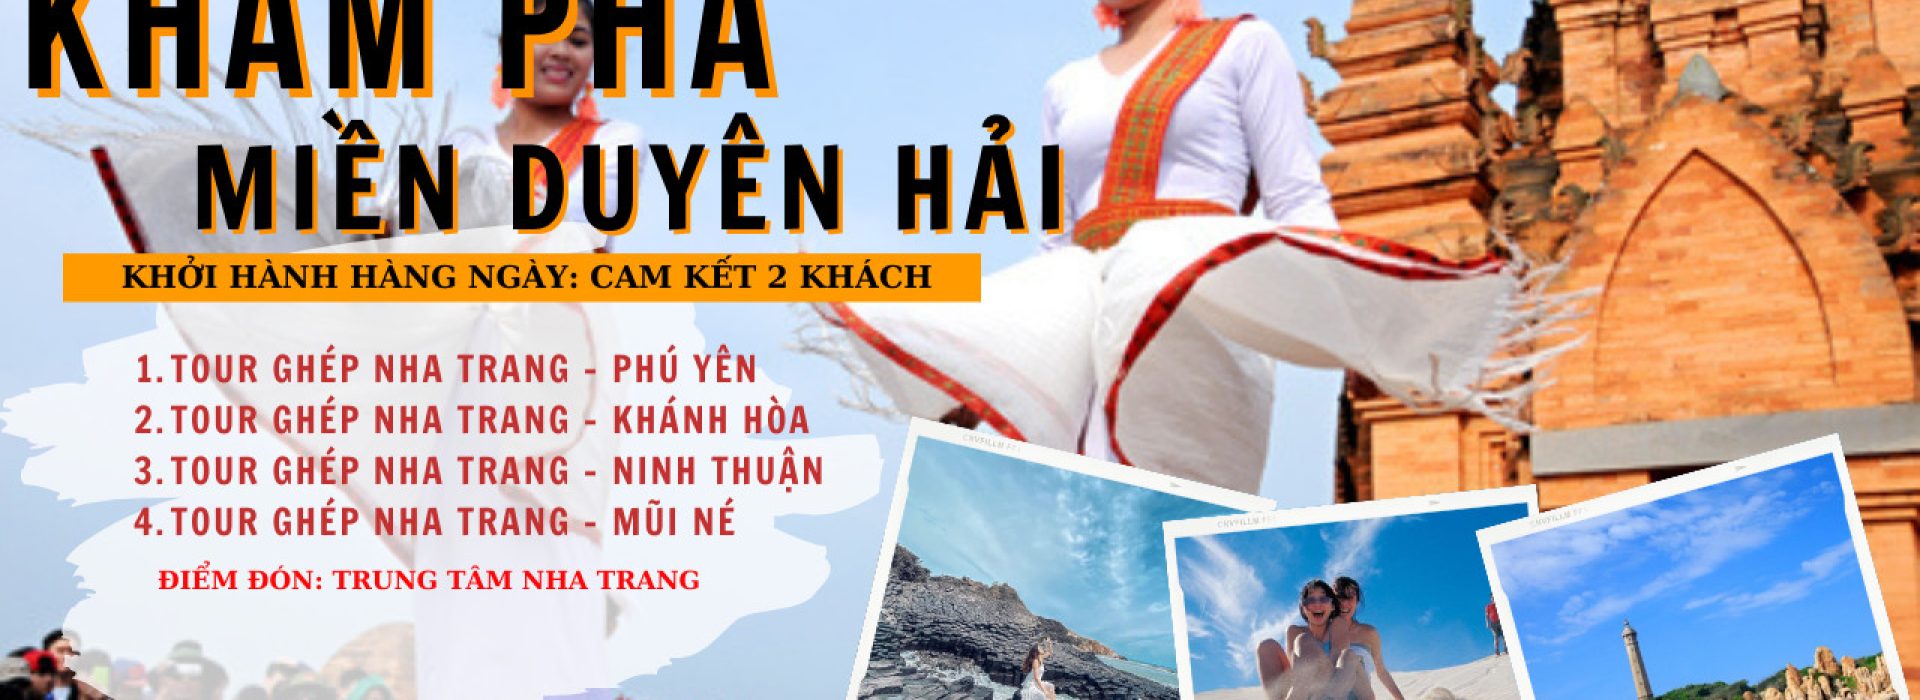 banner Kham Phá Mien Duyen Hai